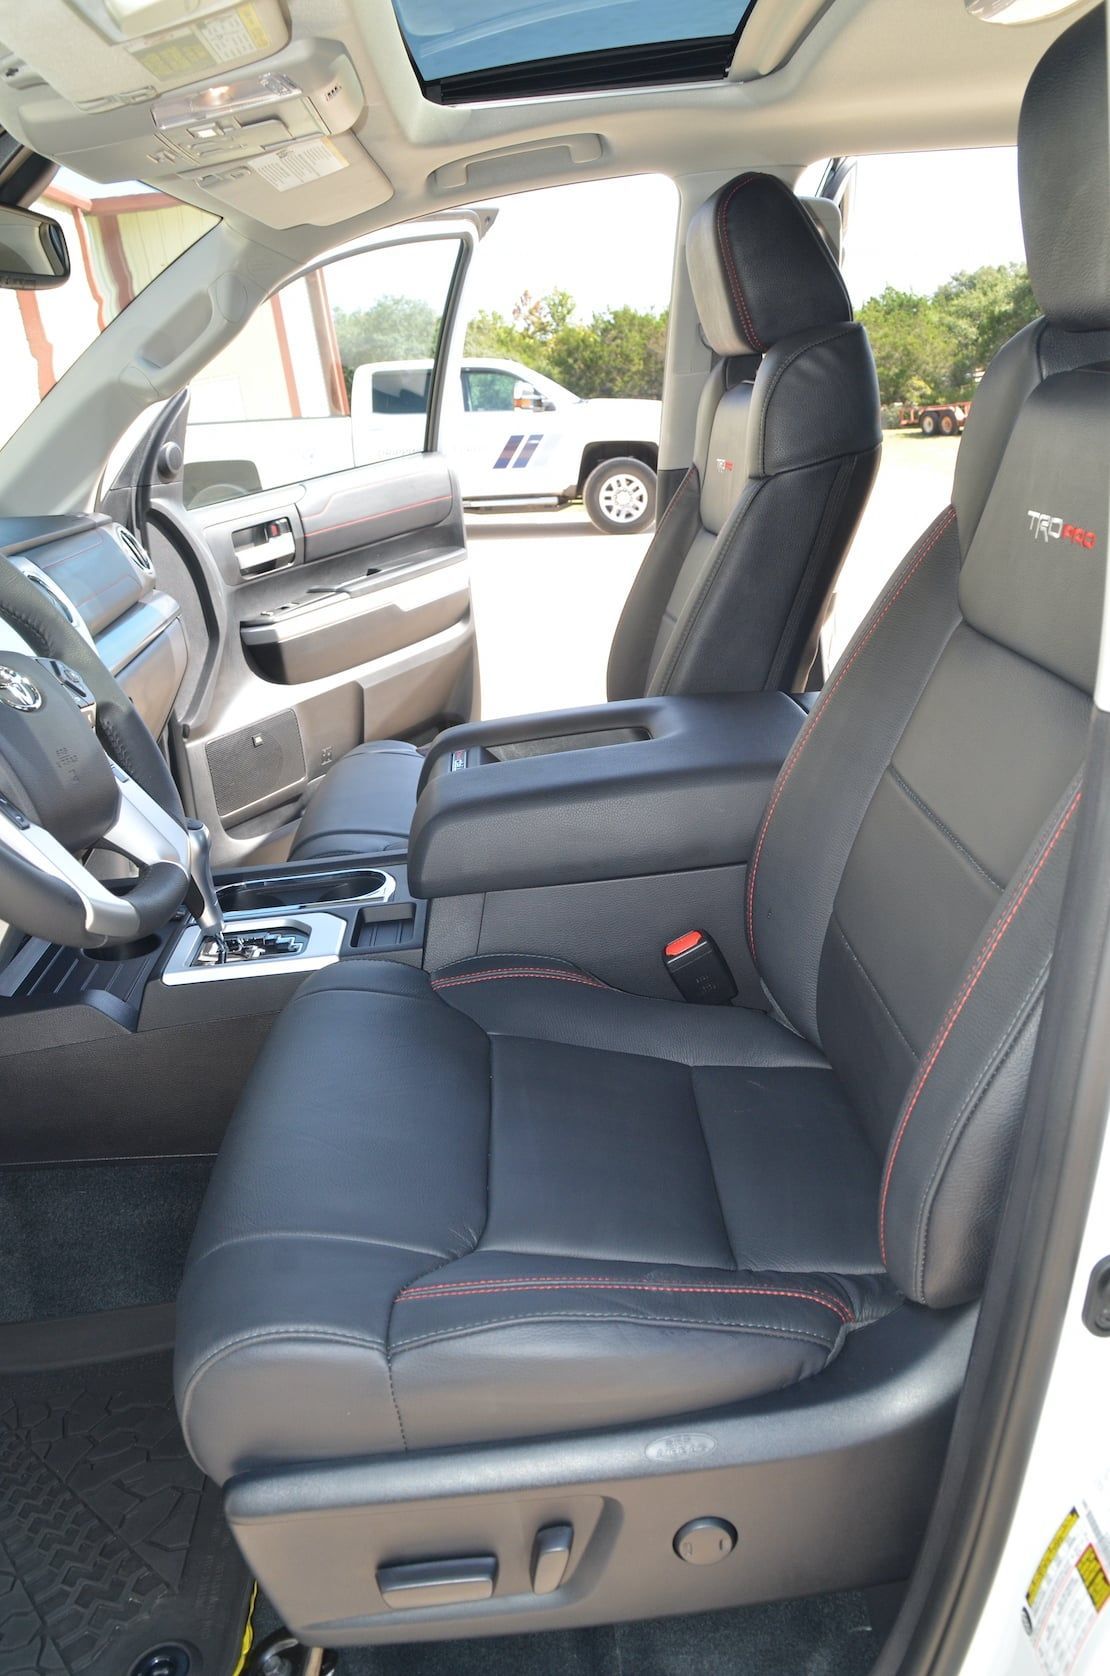 2019 Toyota Tundra TRD Pro 5.7L V8 Interior